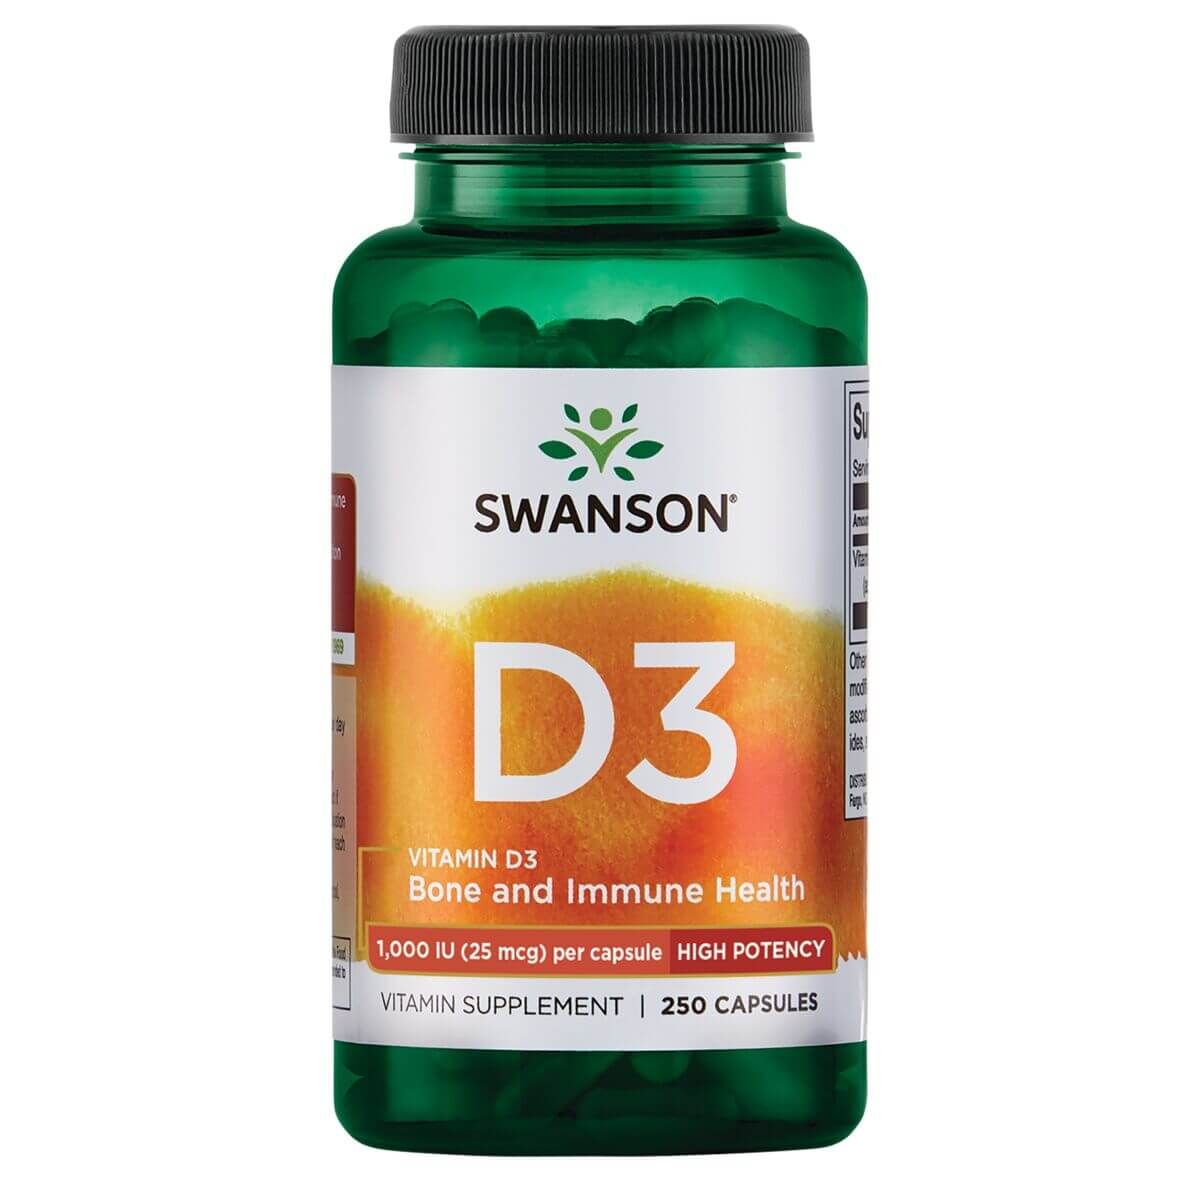 Swanson Vitamin D3 High Potency